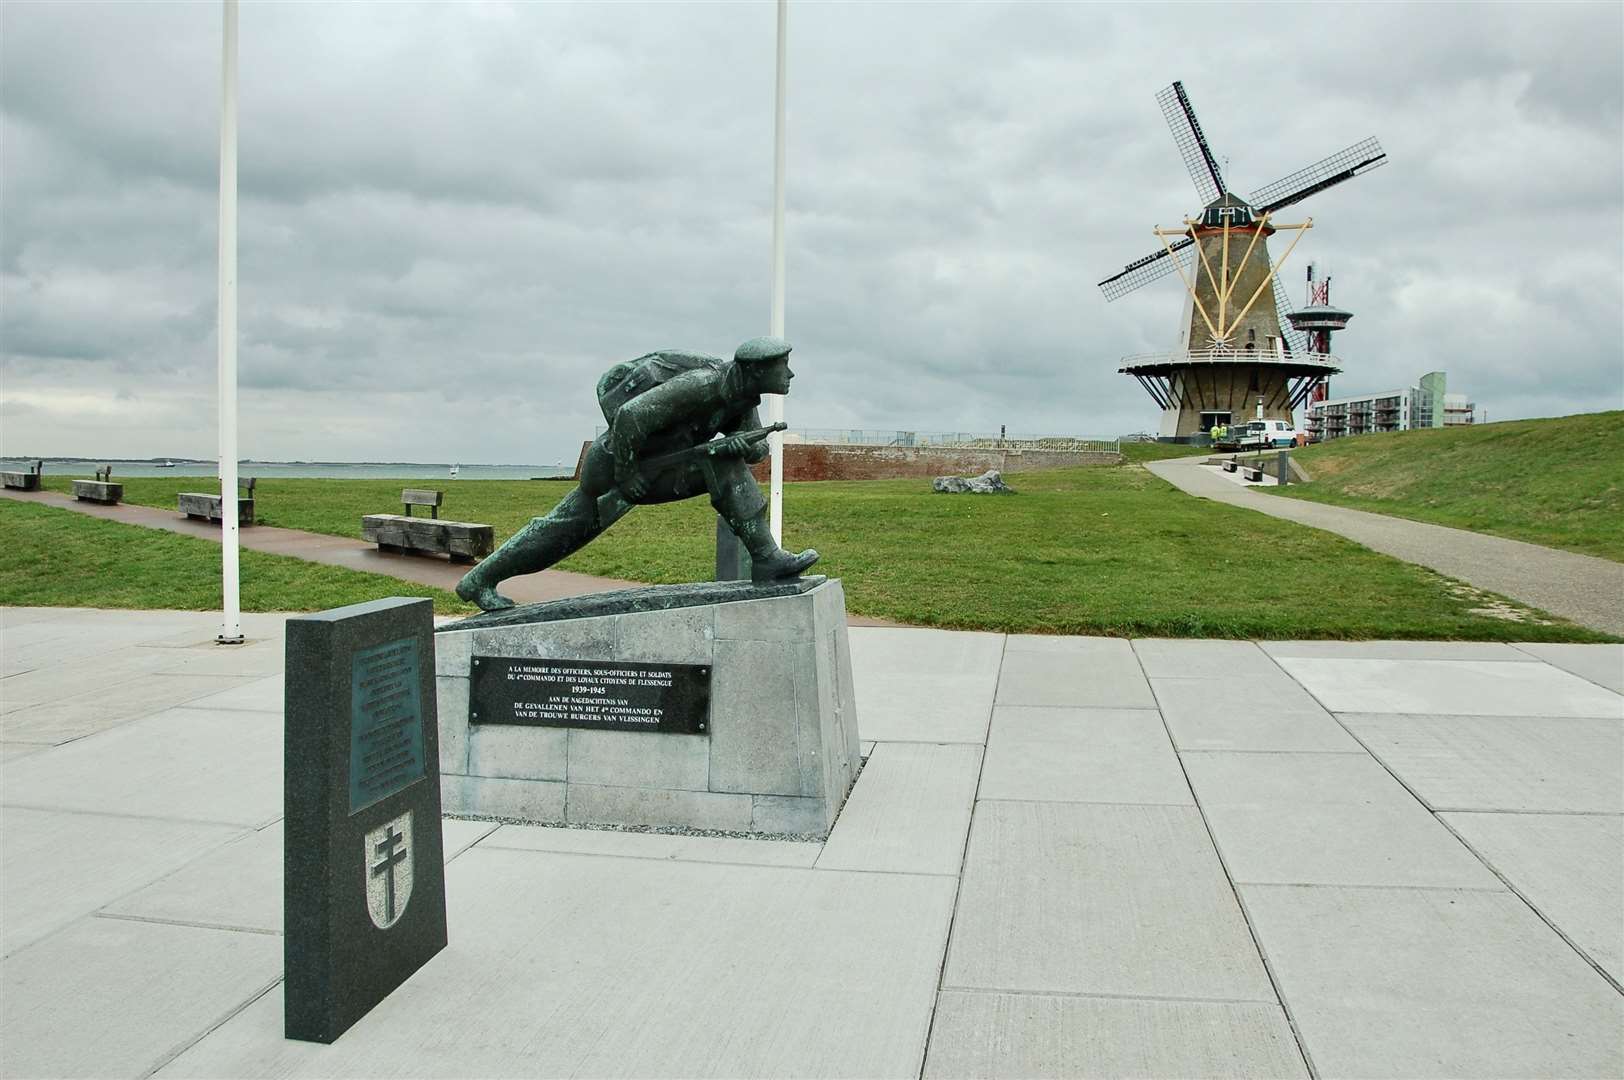 The Commando statue and the windmill, Vlissingen